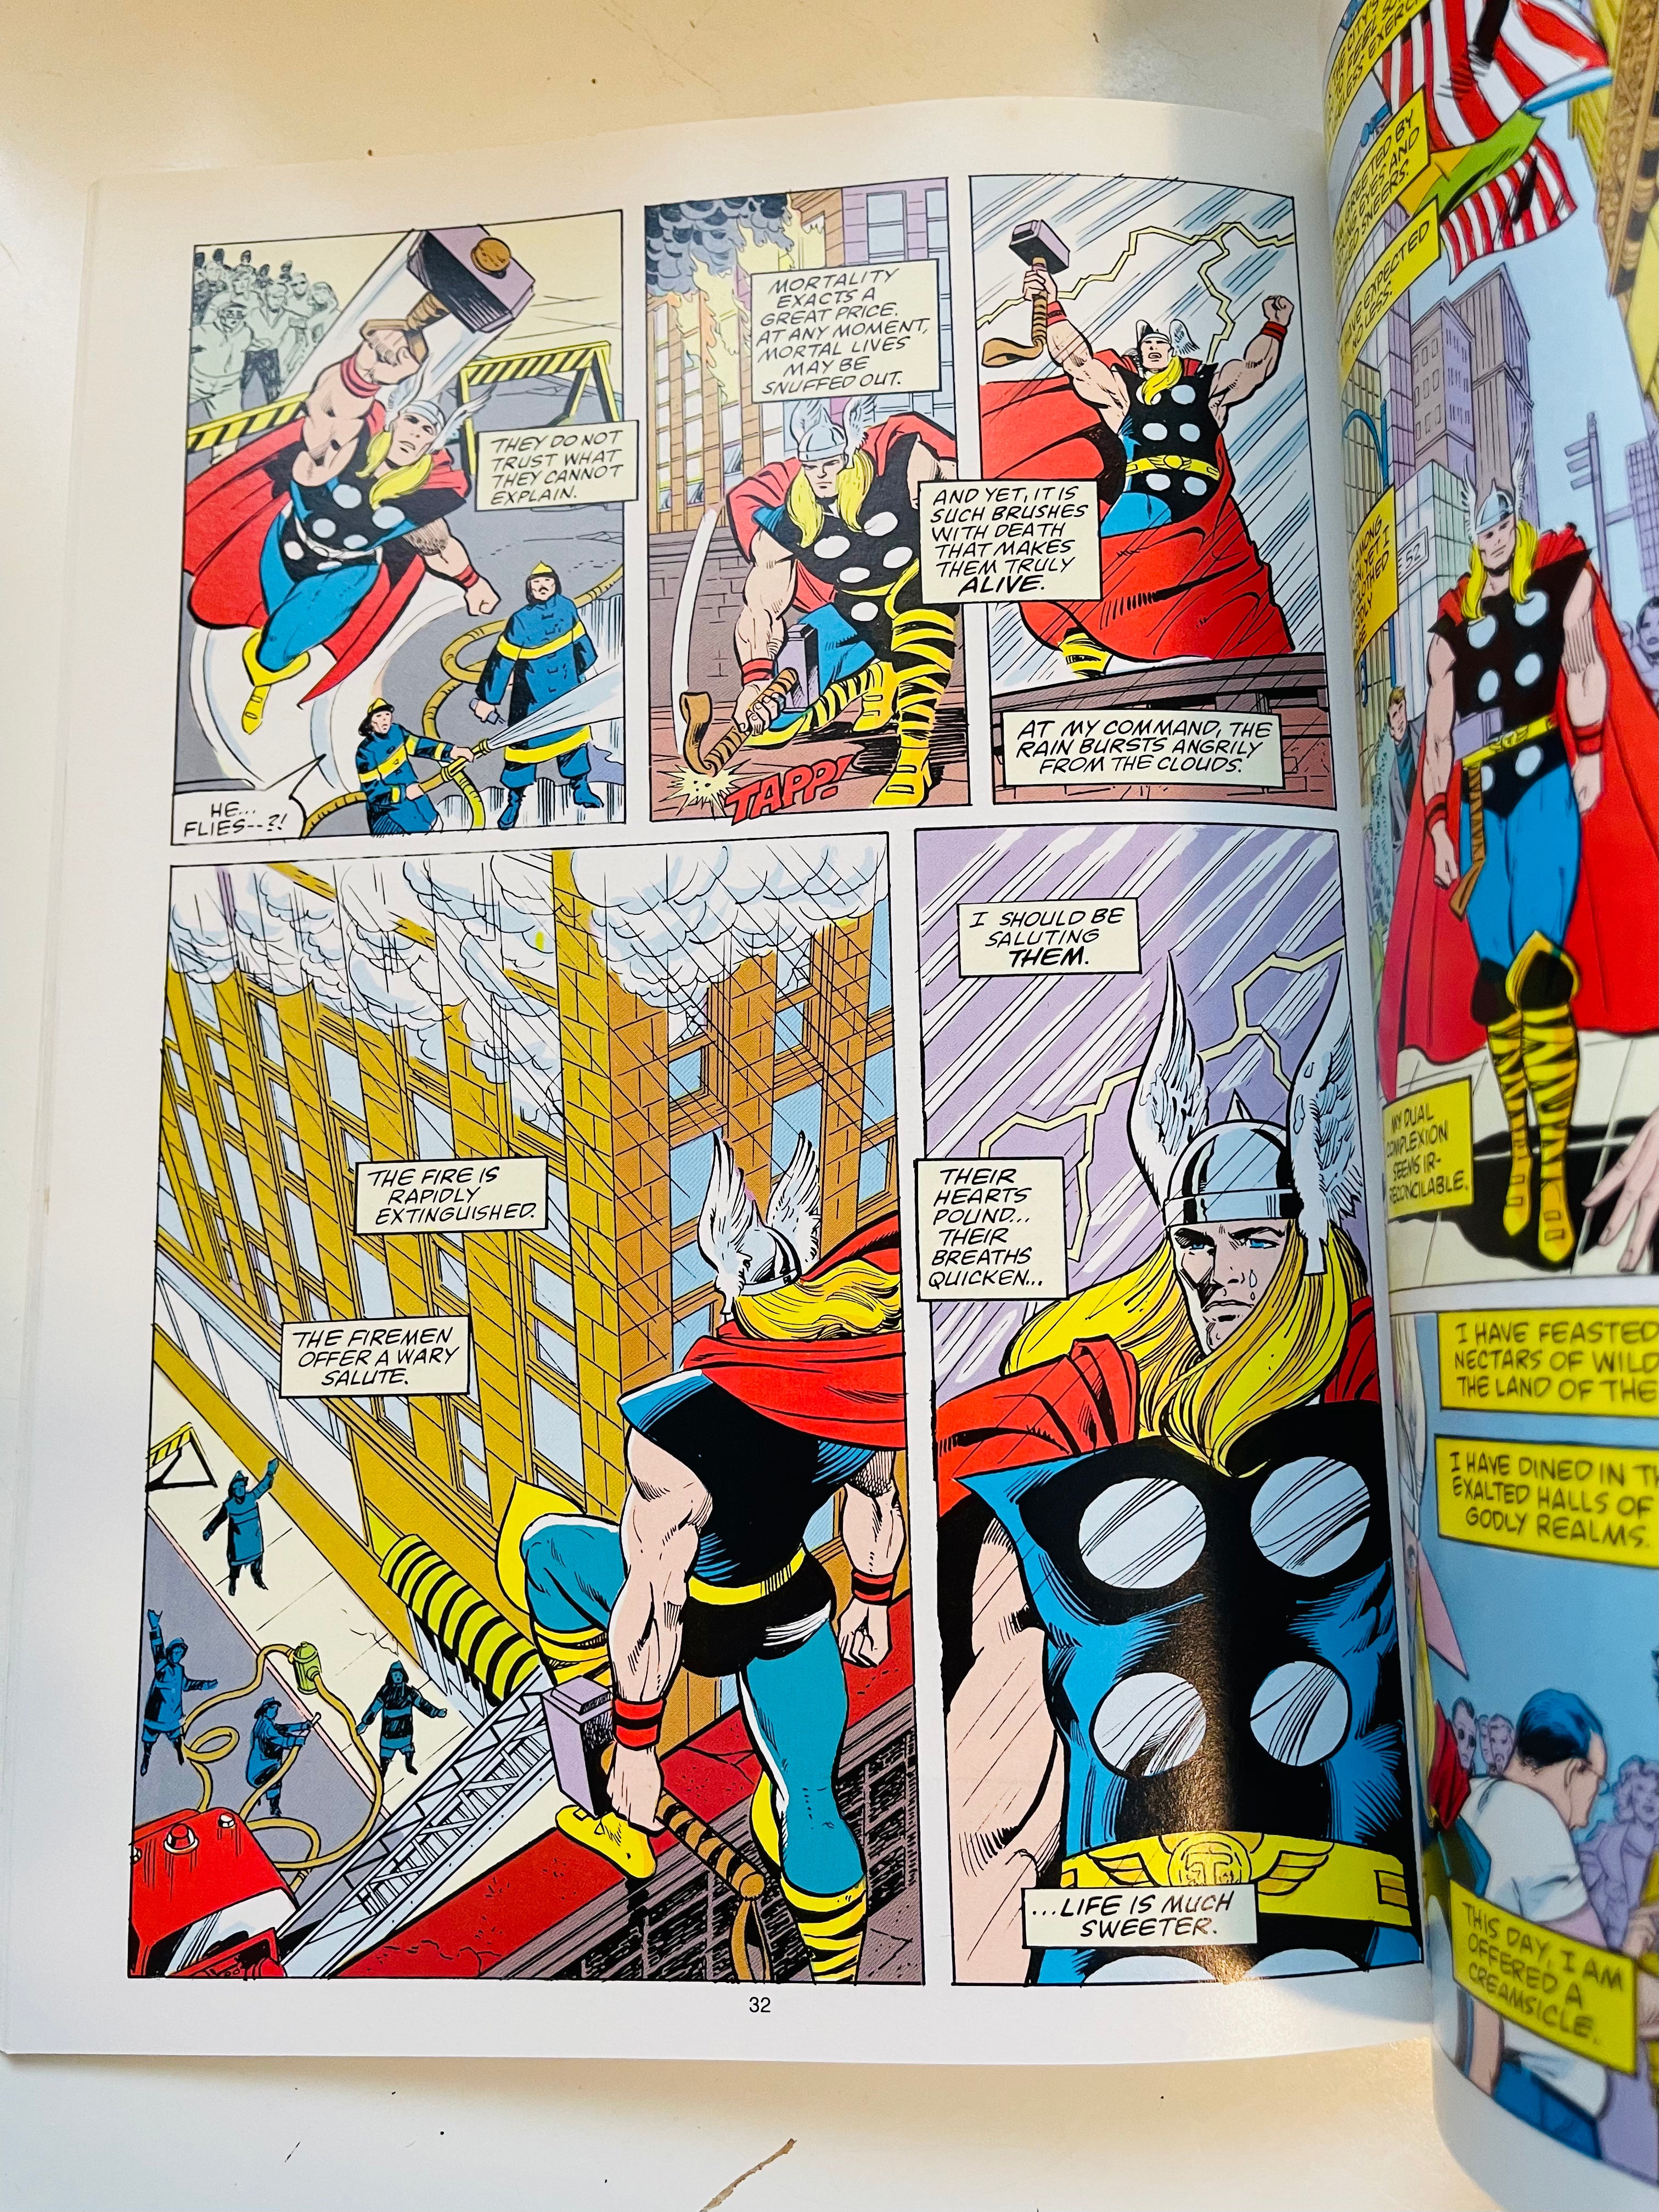 The Mighty Thor Marvel comic magazine 1987